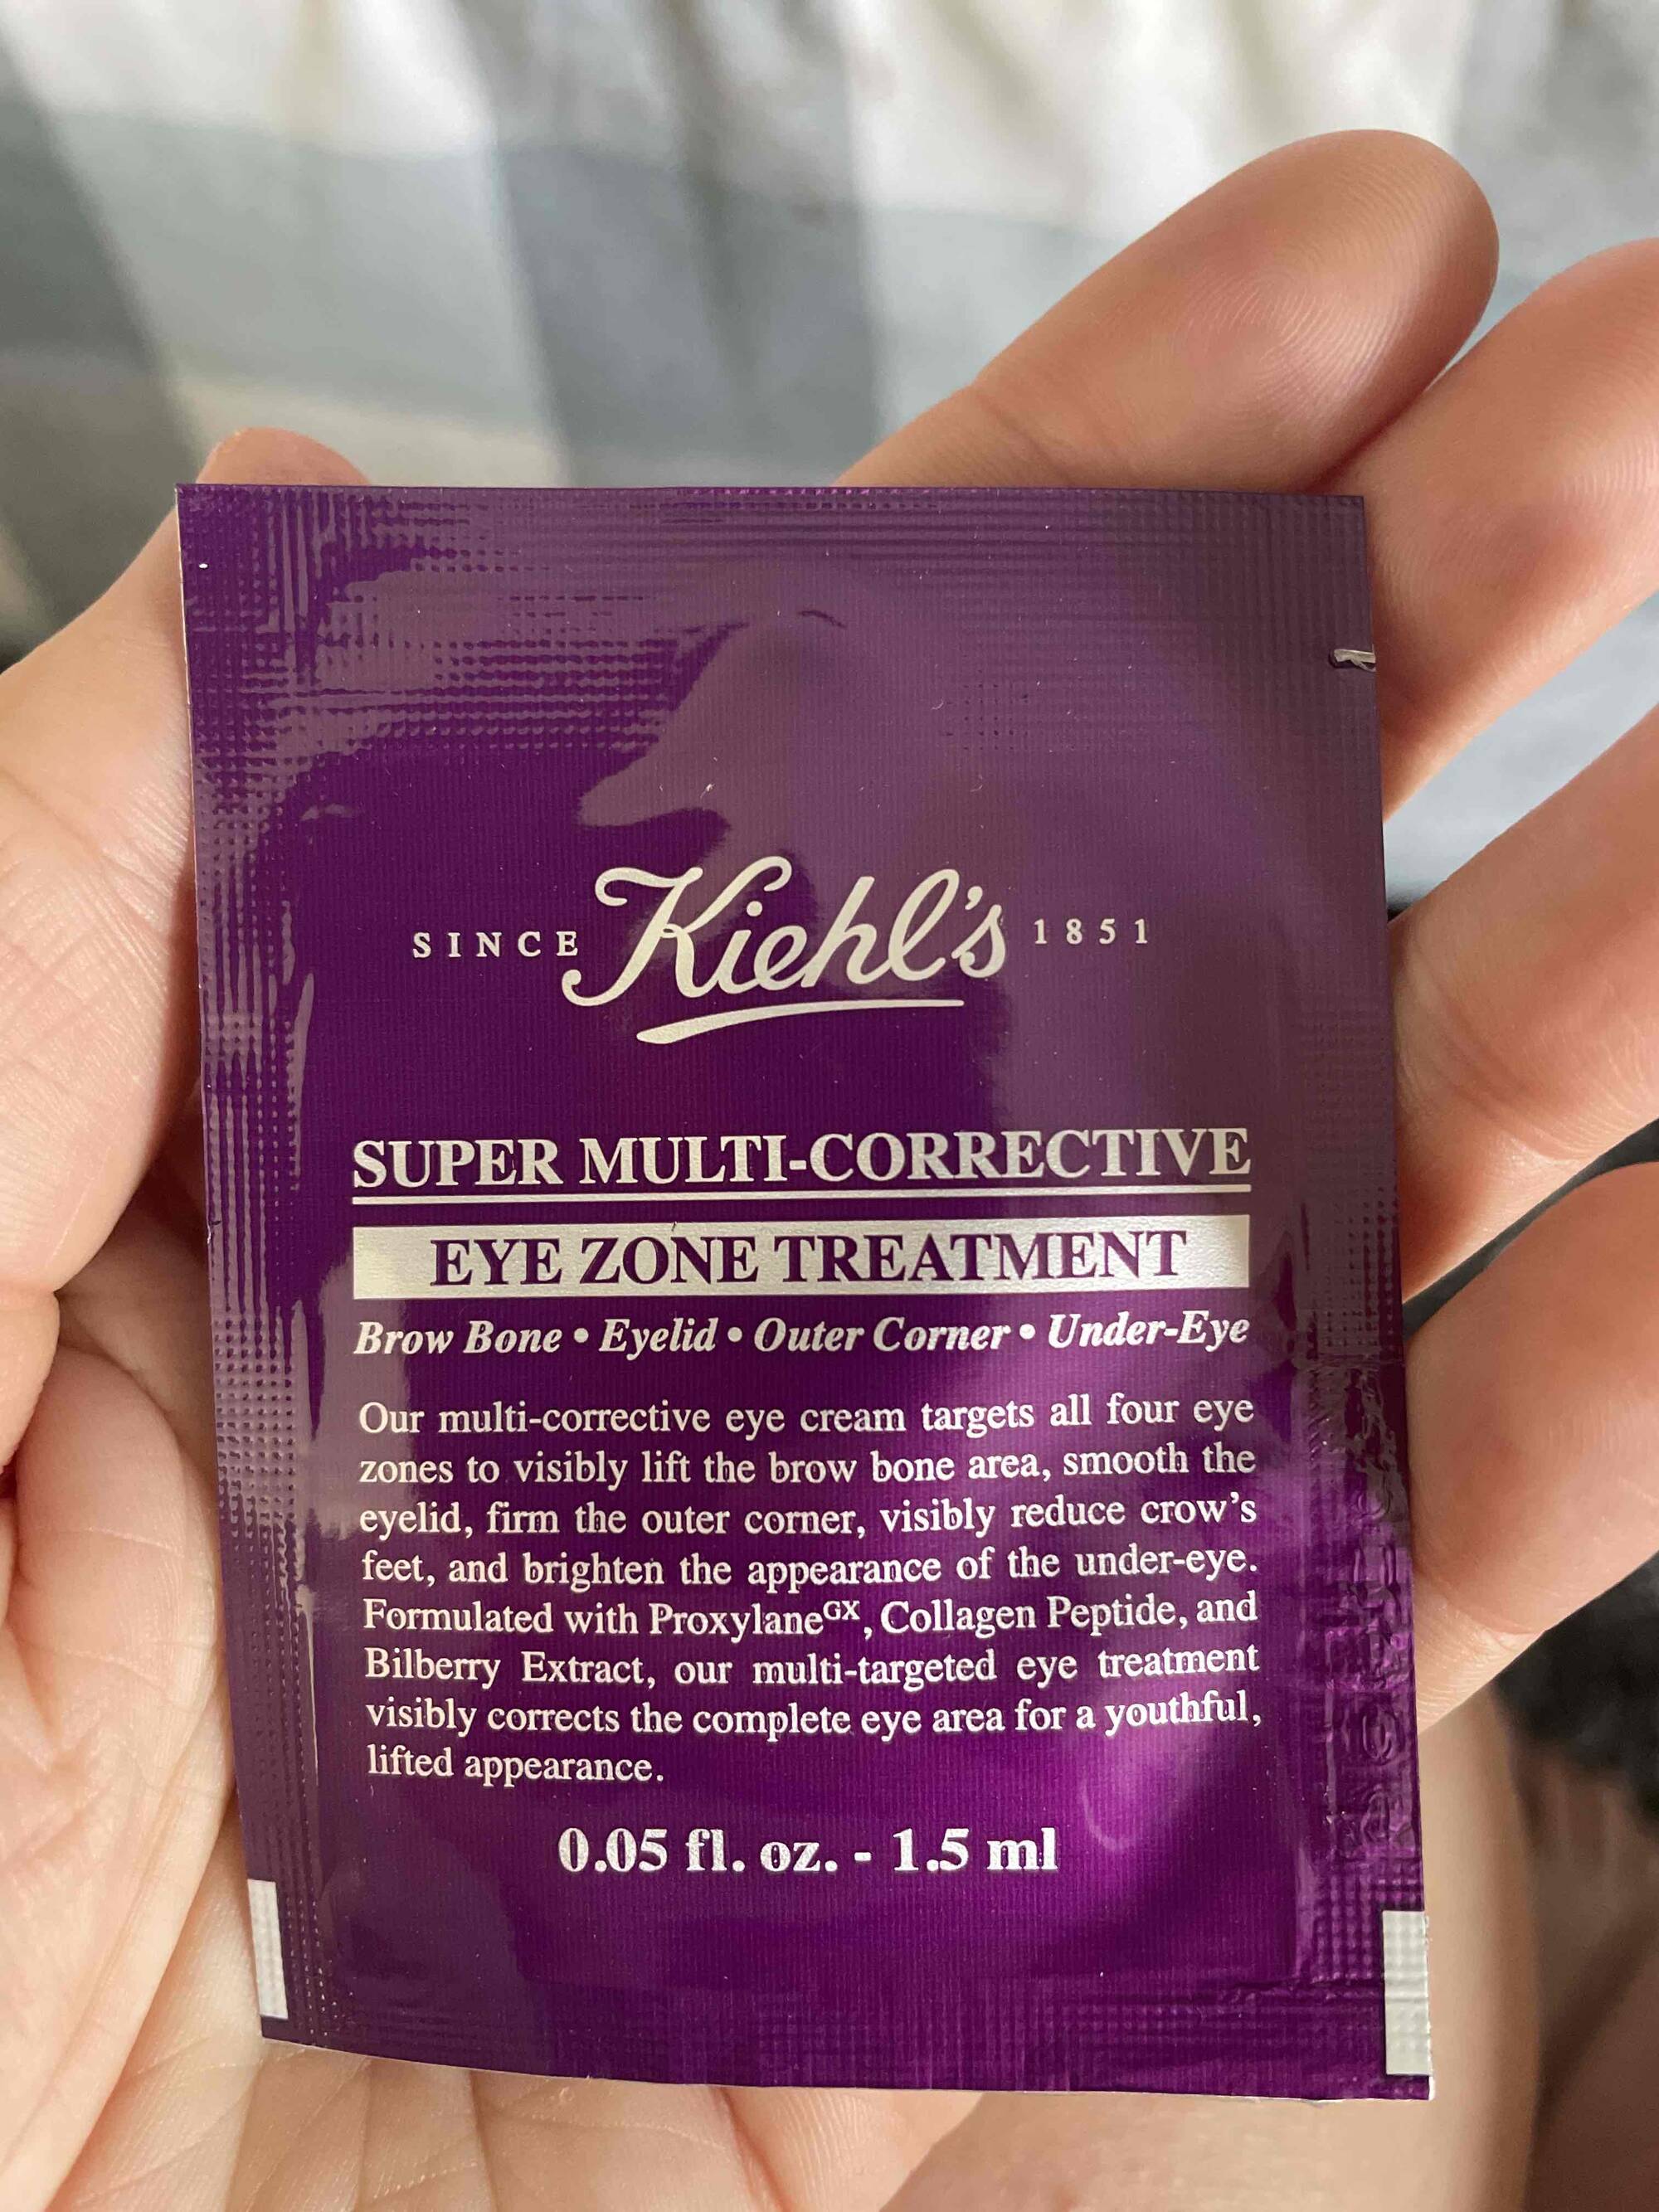 KIEHL'S - Super multi-corrective - Eye zone treatment